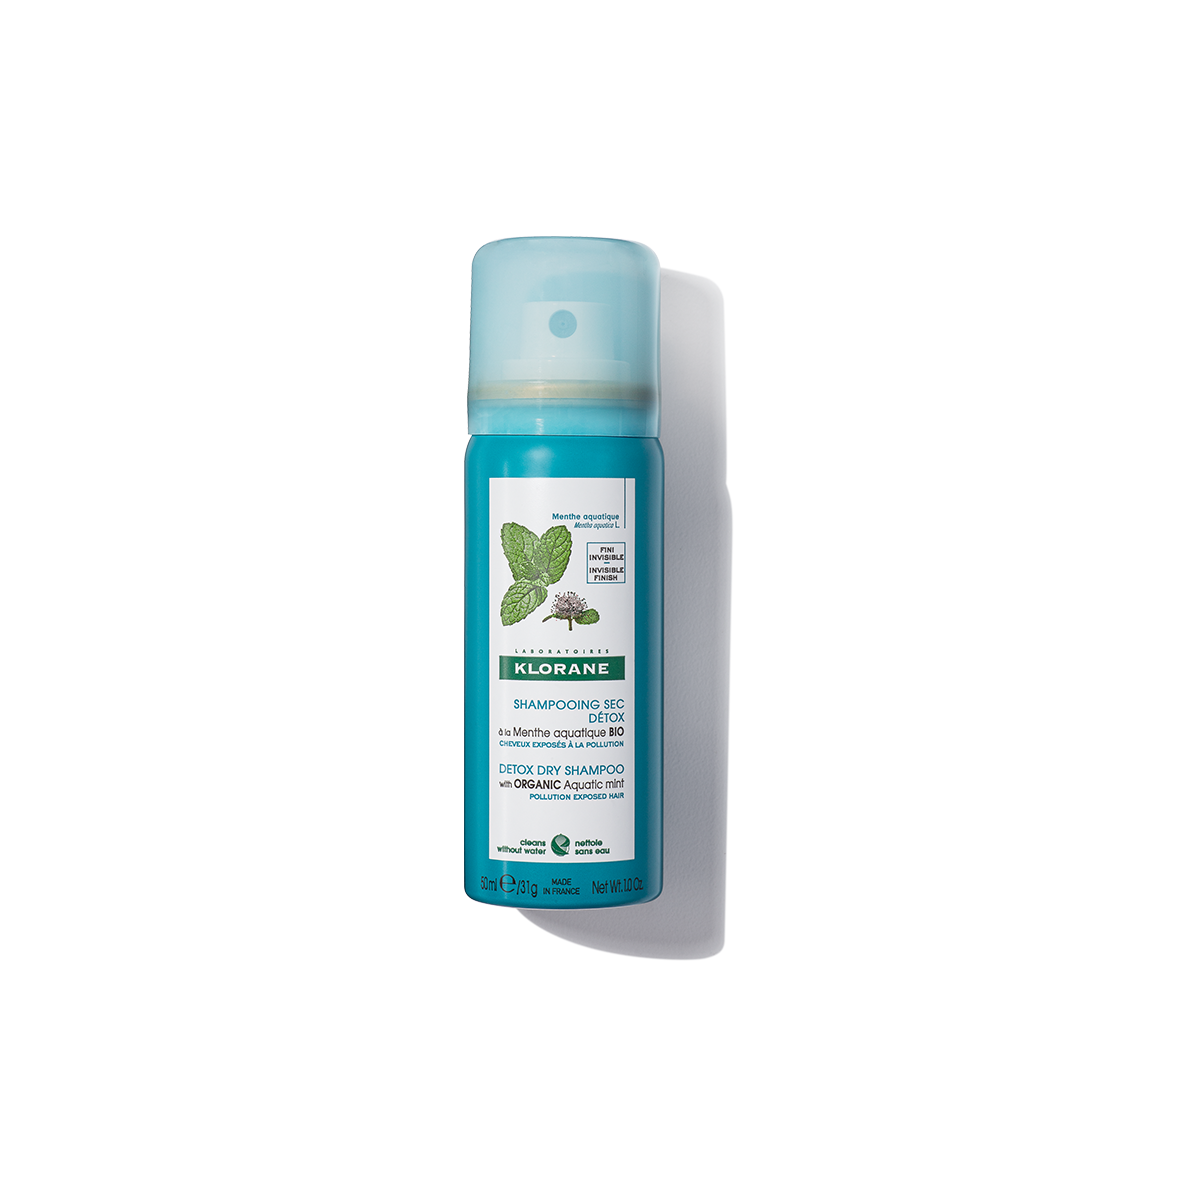 Primary Image of Aquatic Mint Dry Shampoo